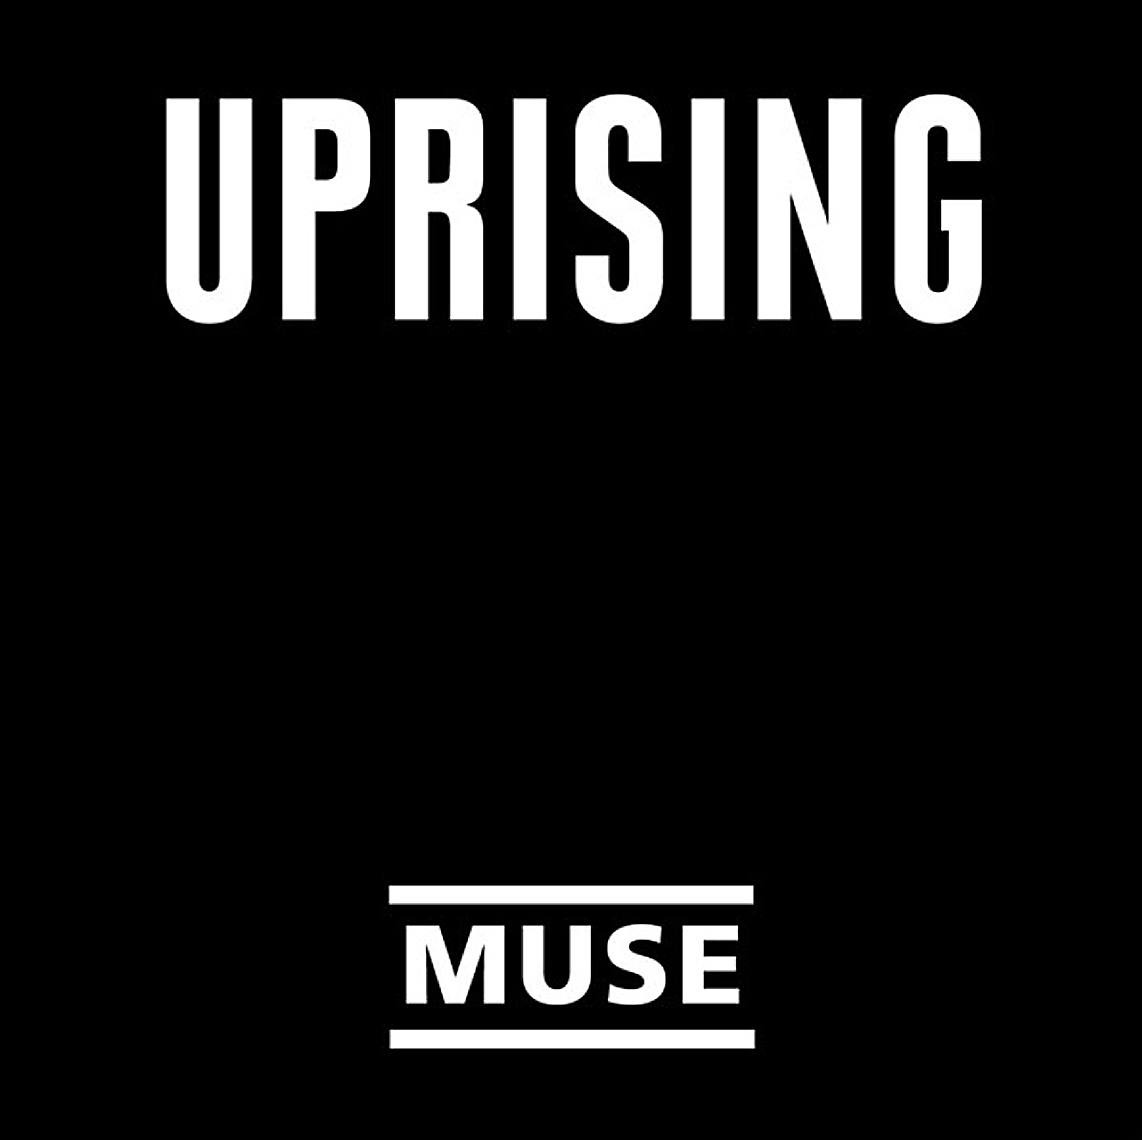 [muse-uprising.jpg]